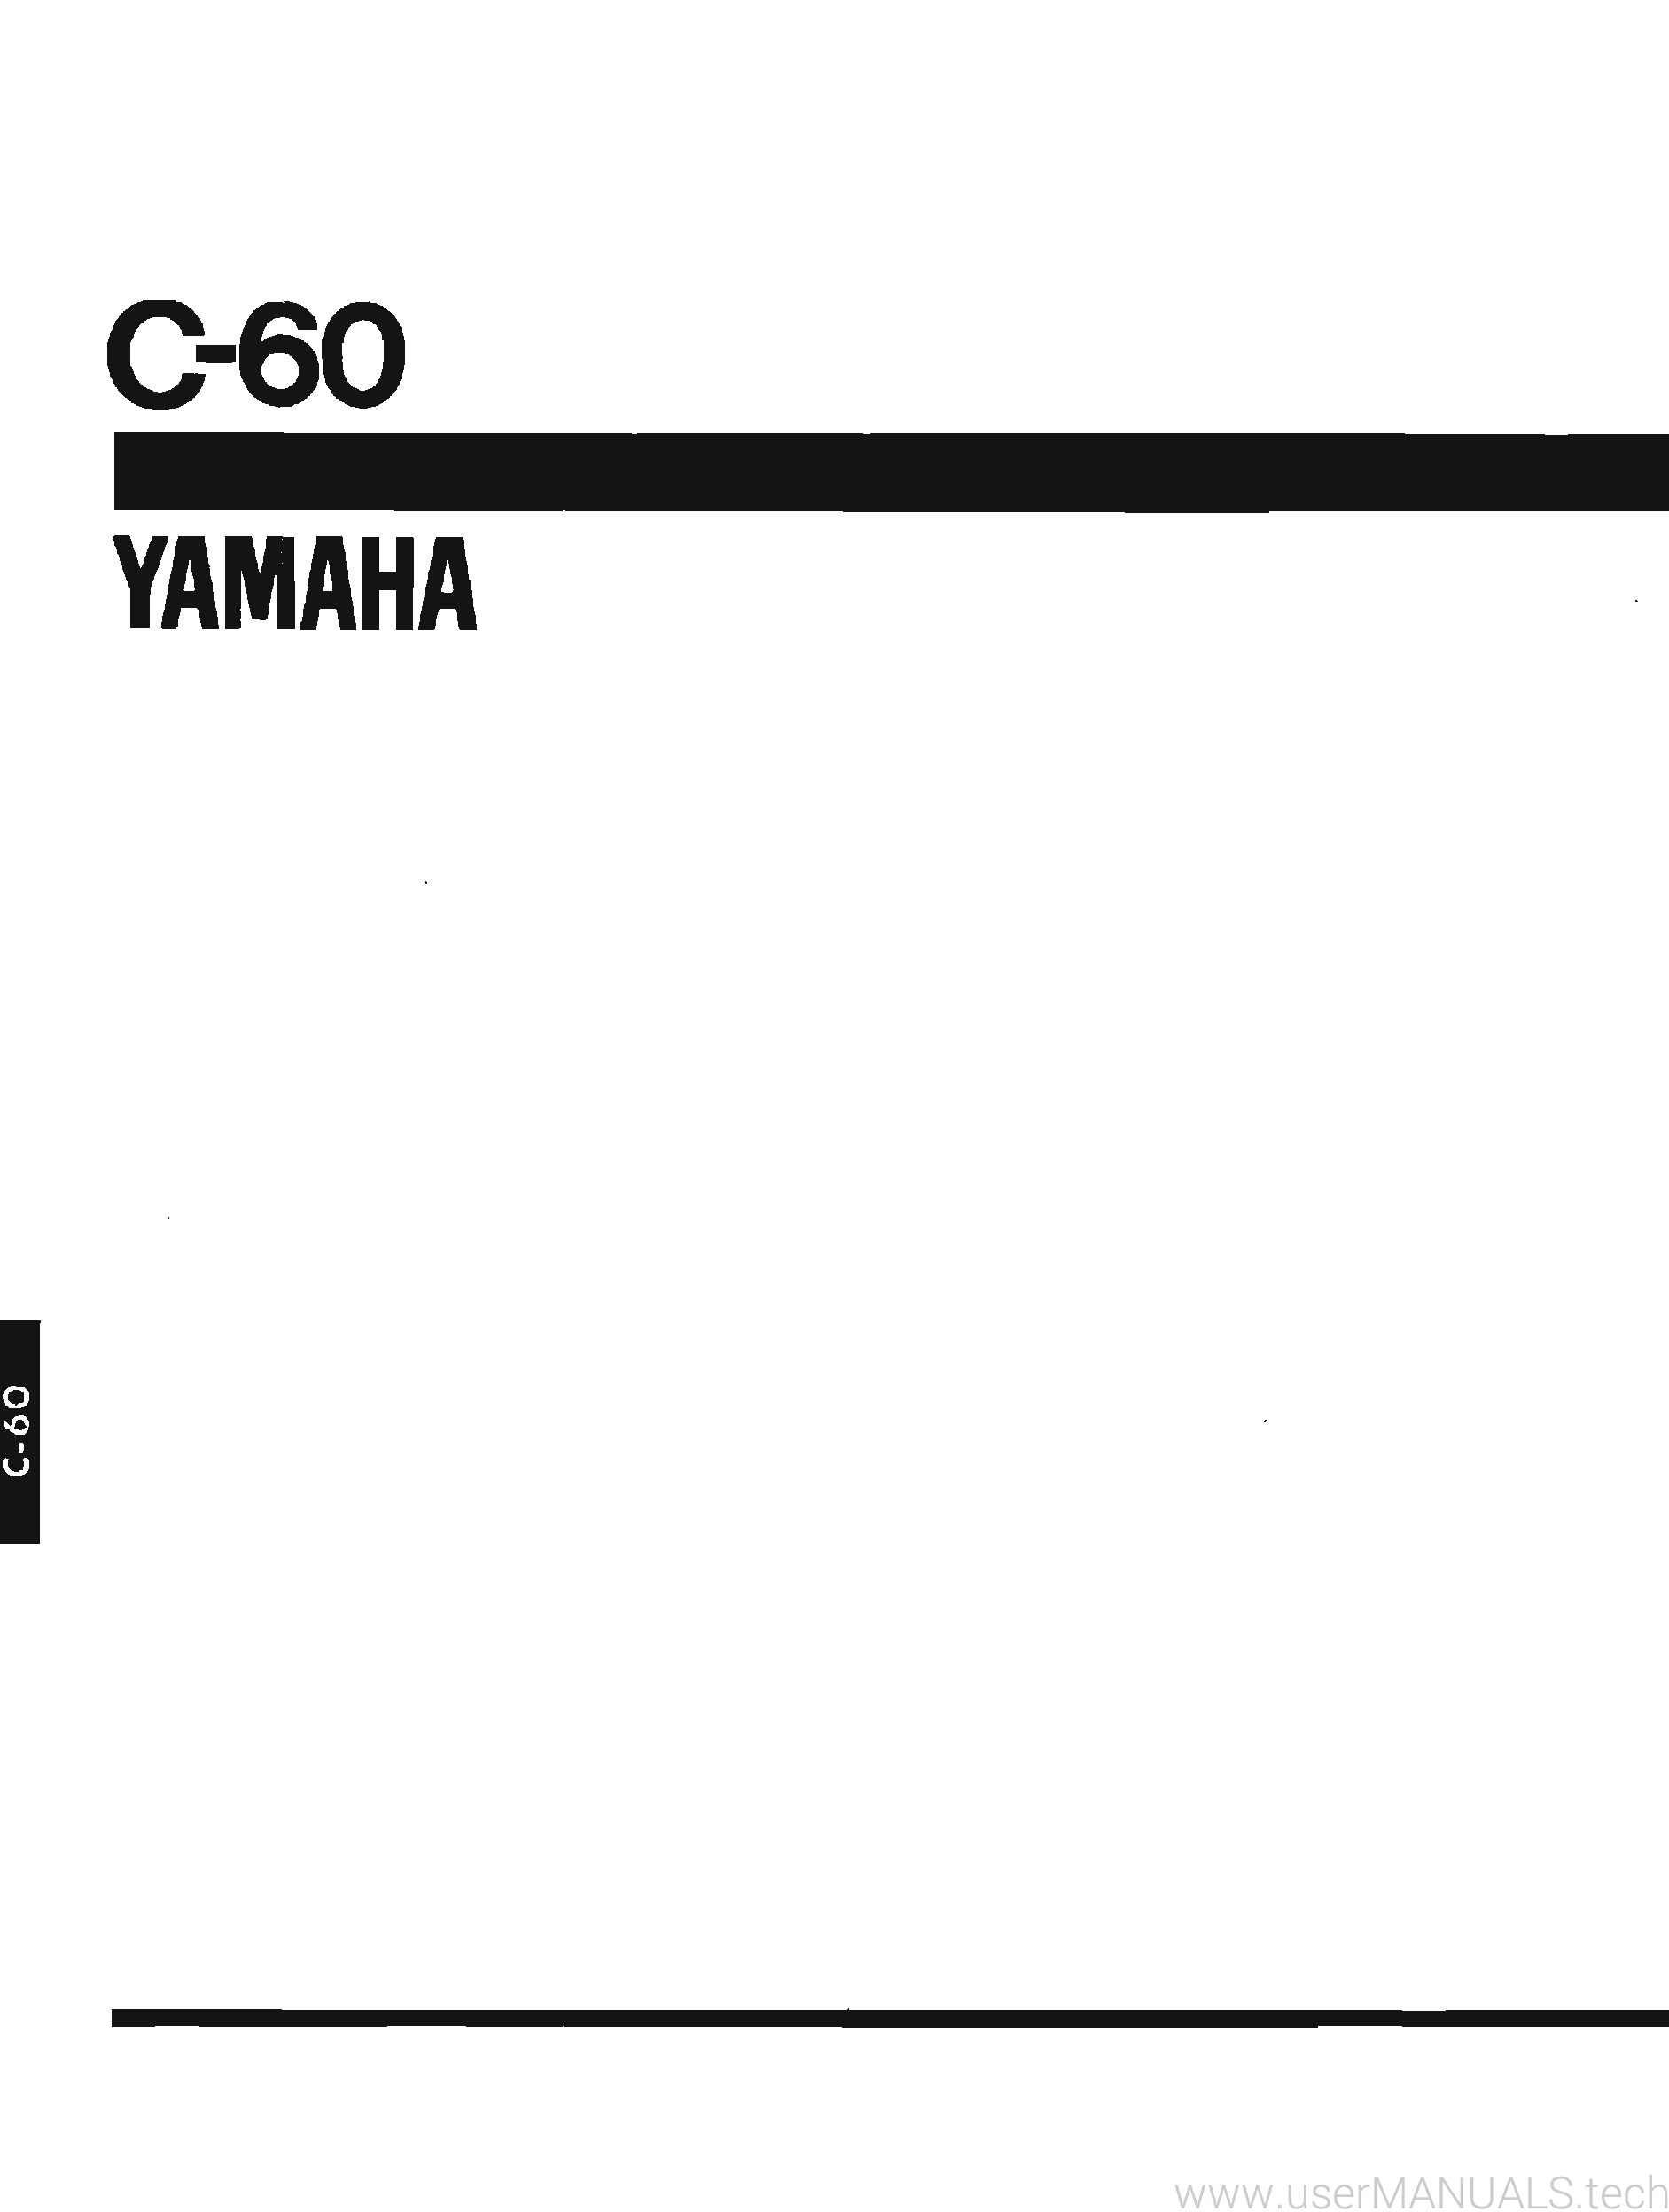 Yamaha C-60 Service Manual, Page: 2